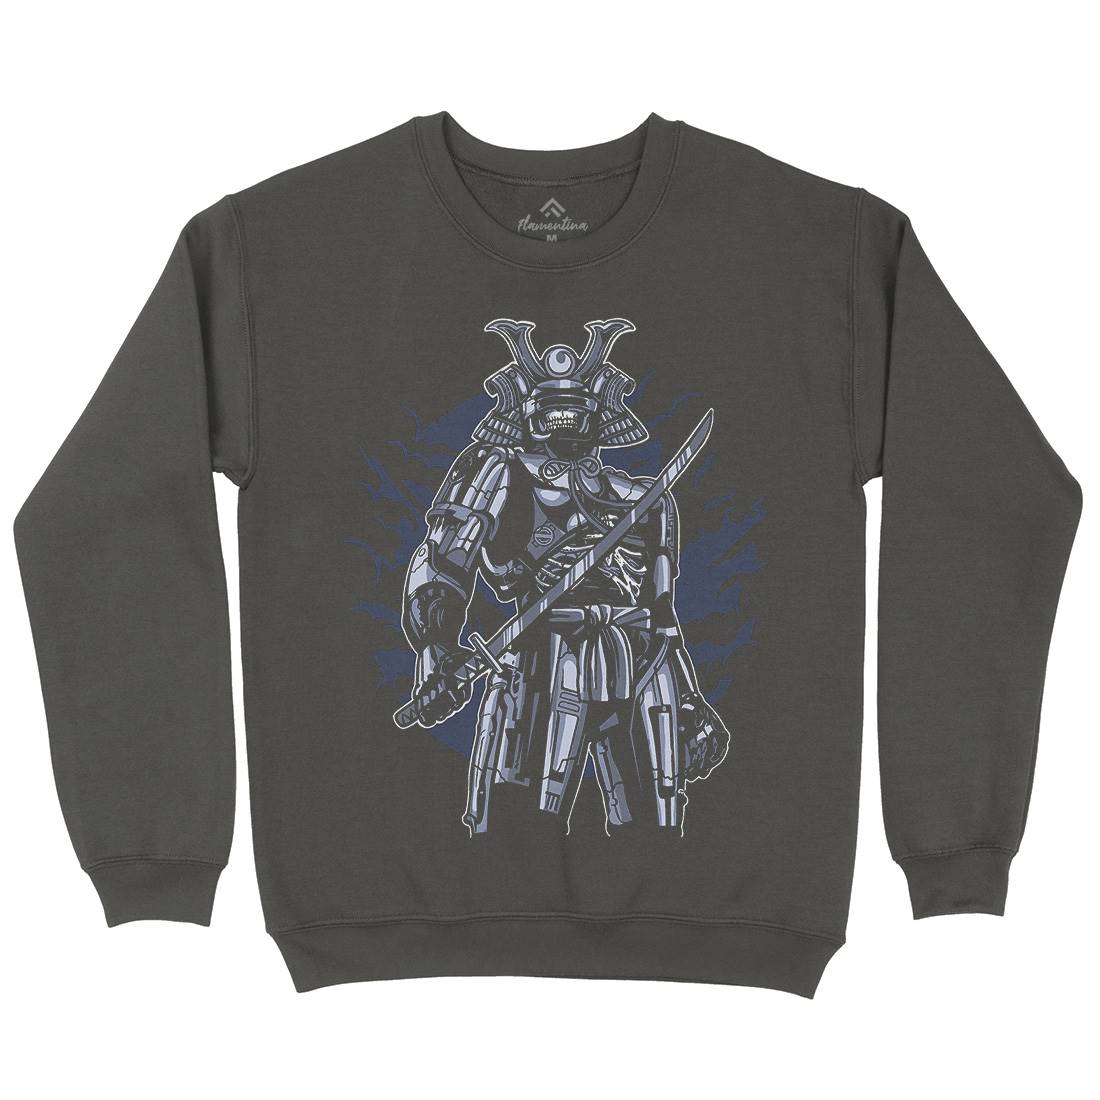 Samurai Robot Kids Crew Neck Sweatshirt Warriors A569